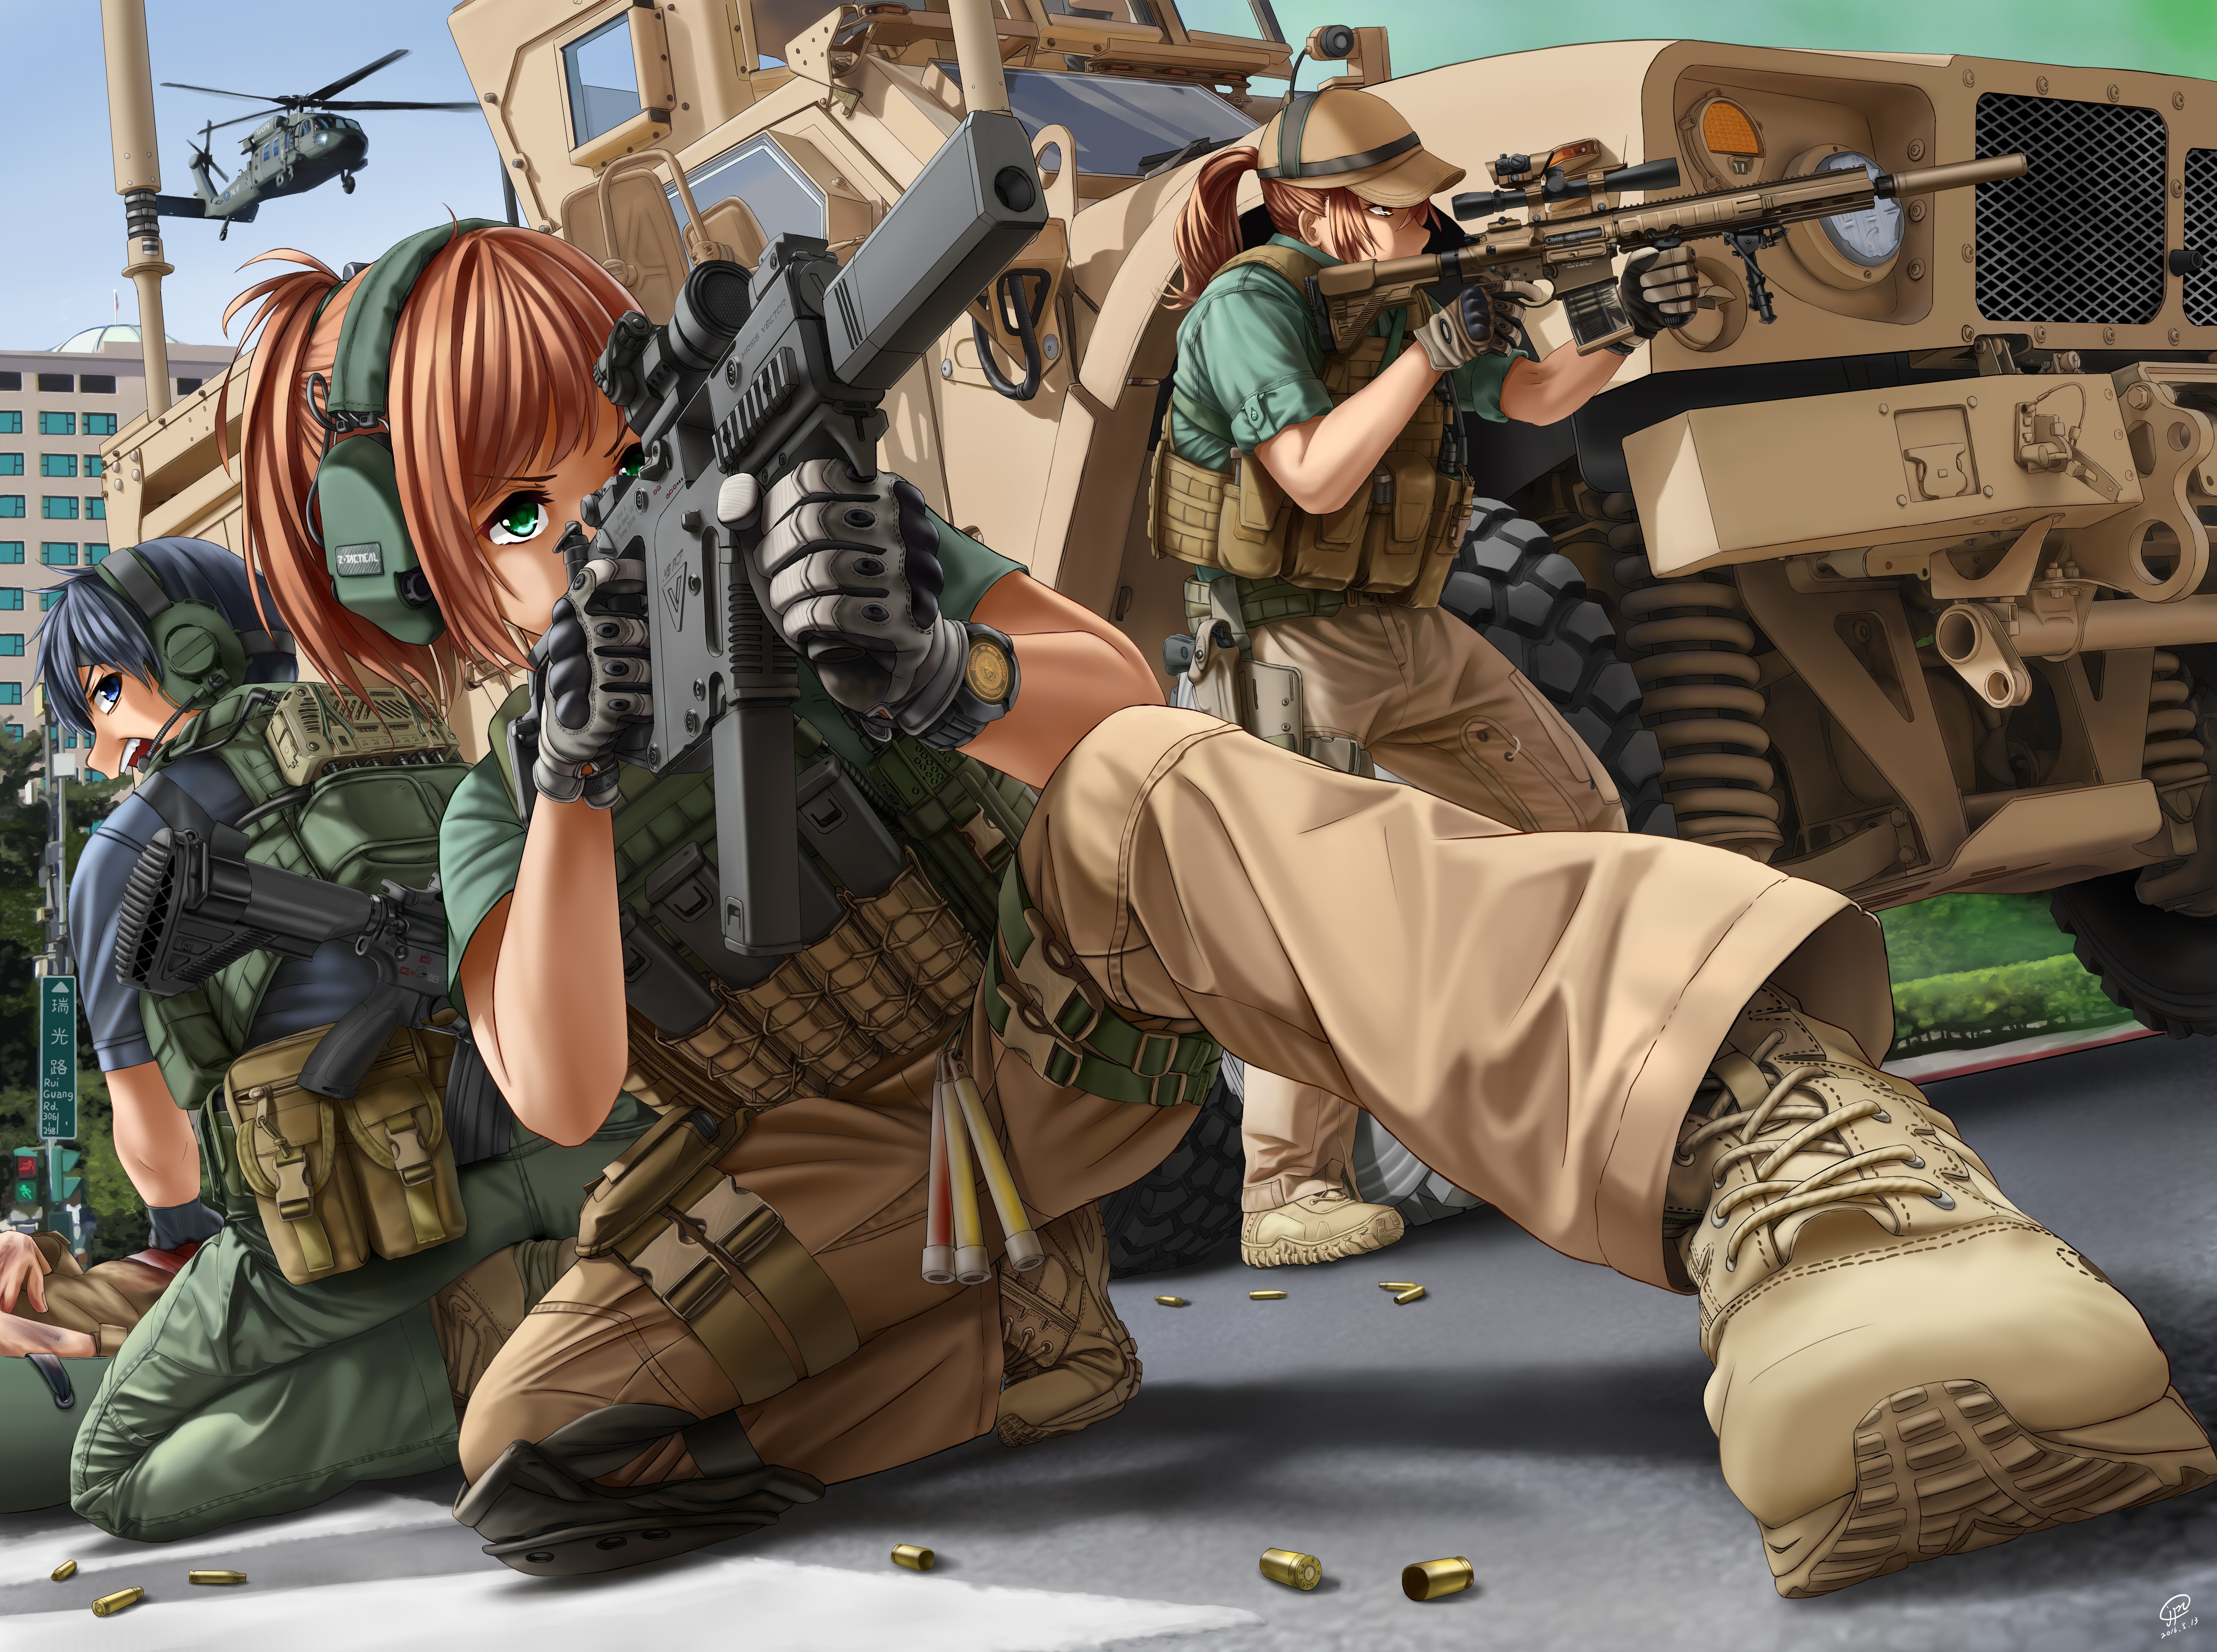 Anime 5100x3800 anime anime girls boots building city gloves grass gun hat headphones weapon machine gun girls with guns aiming military Vector .45 ACP suppressors Humvee